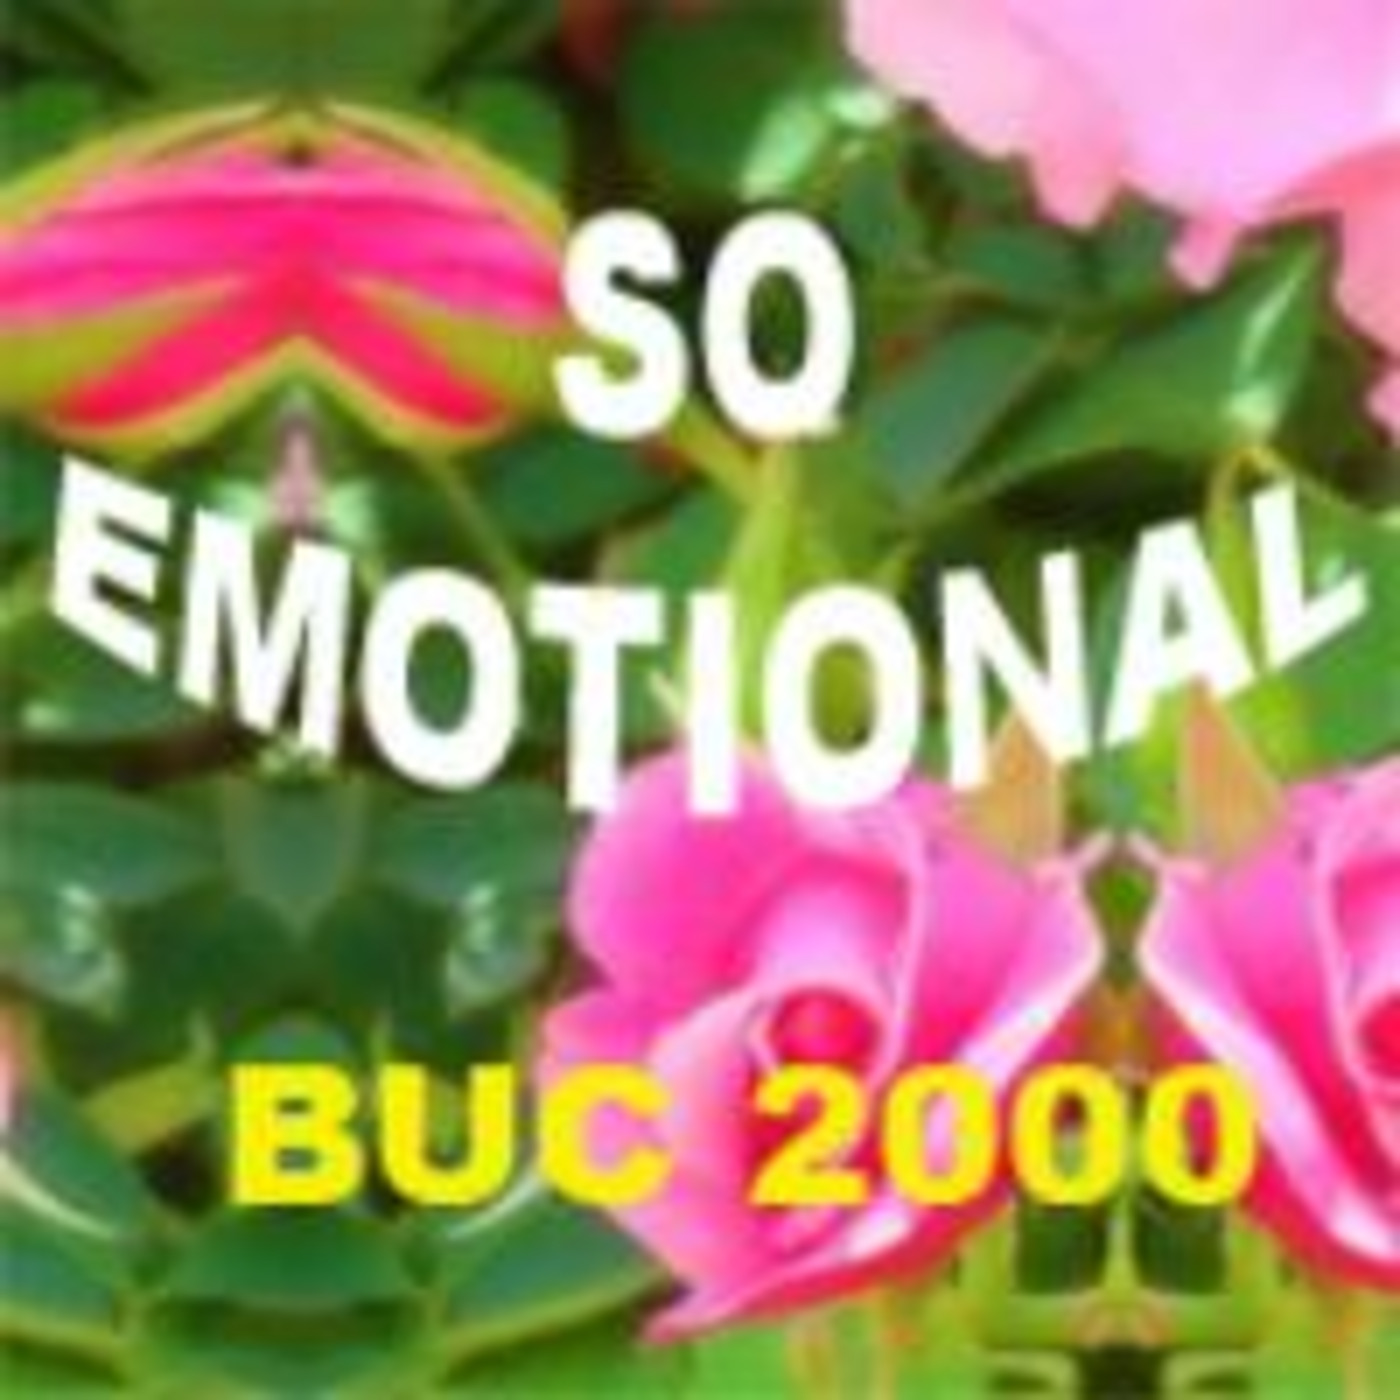 DJ Buc_So Emotional (2000) - Part 2